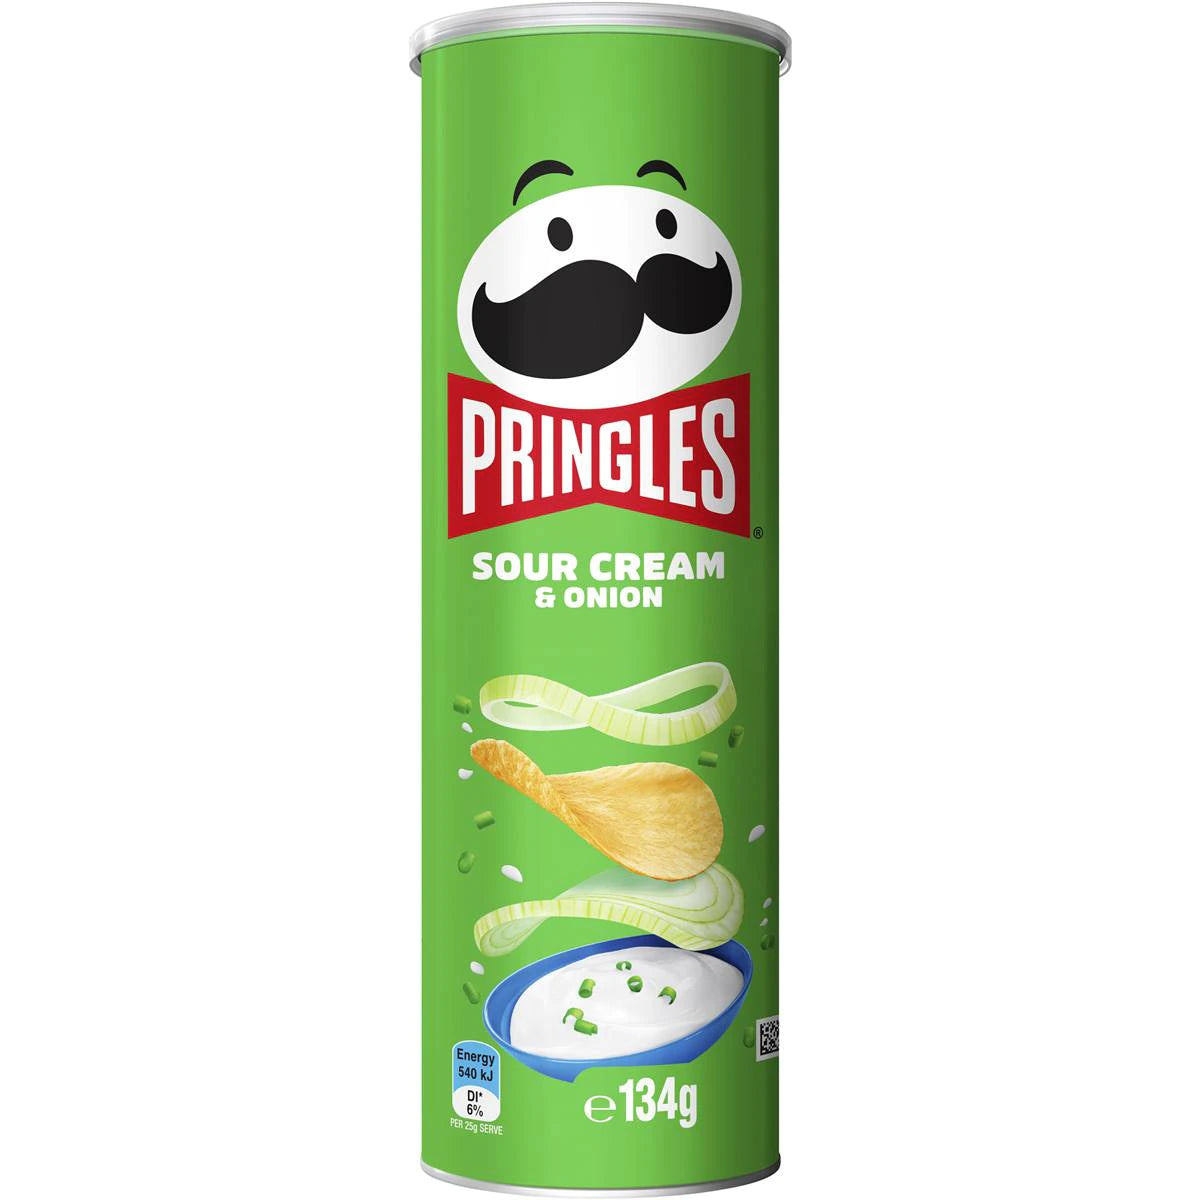 Pringles Sour Cream and Onion 134g